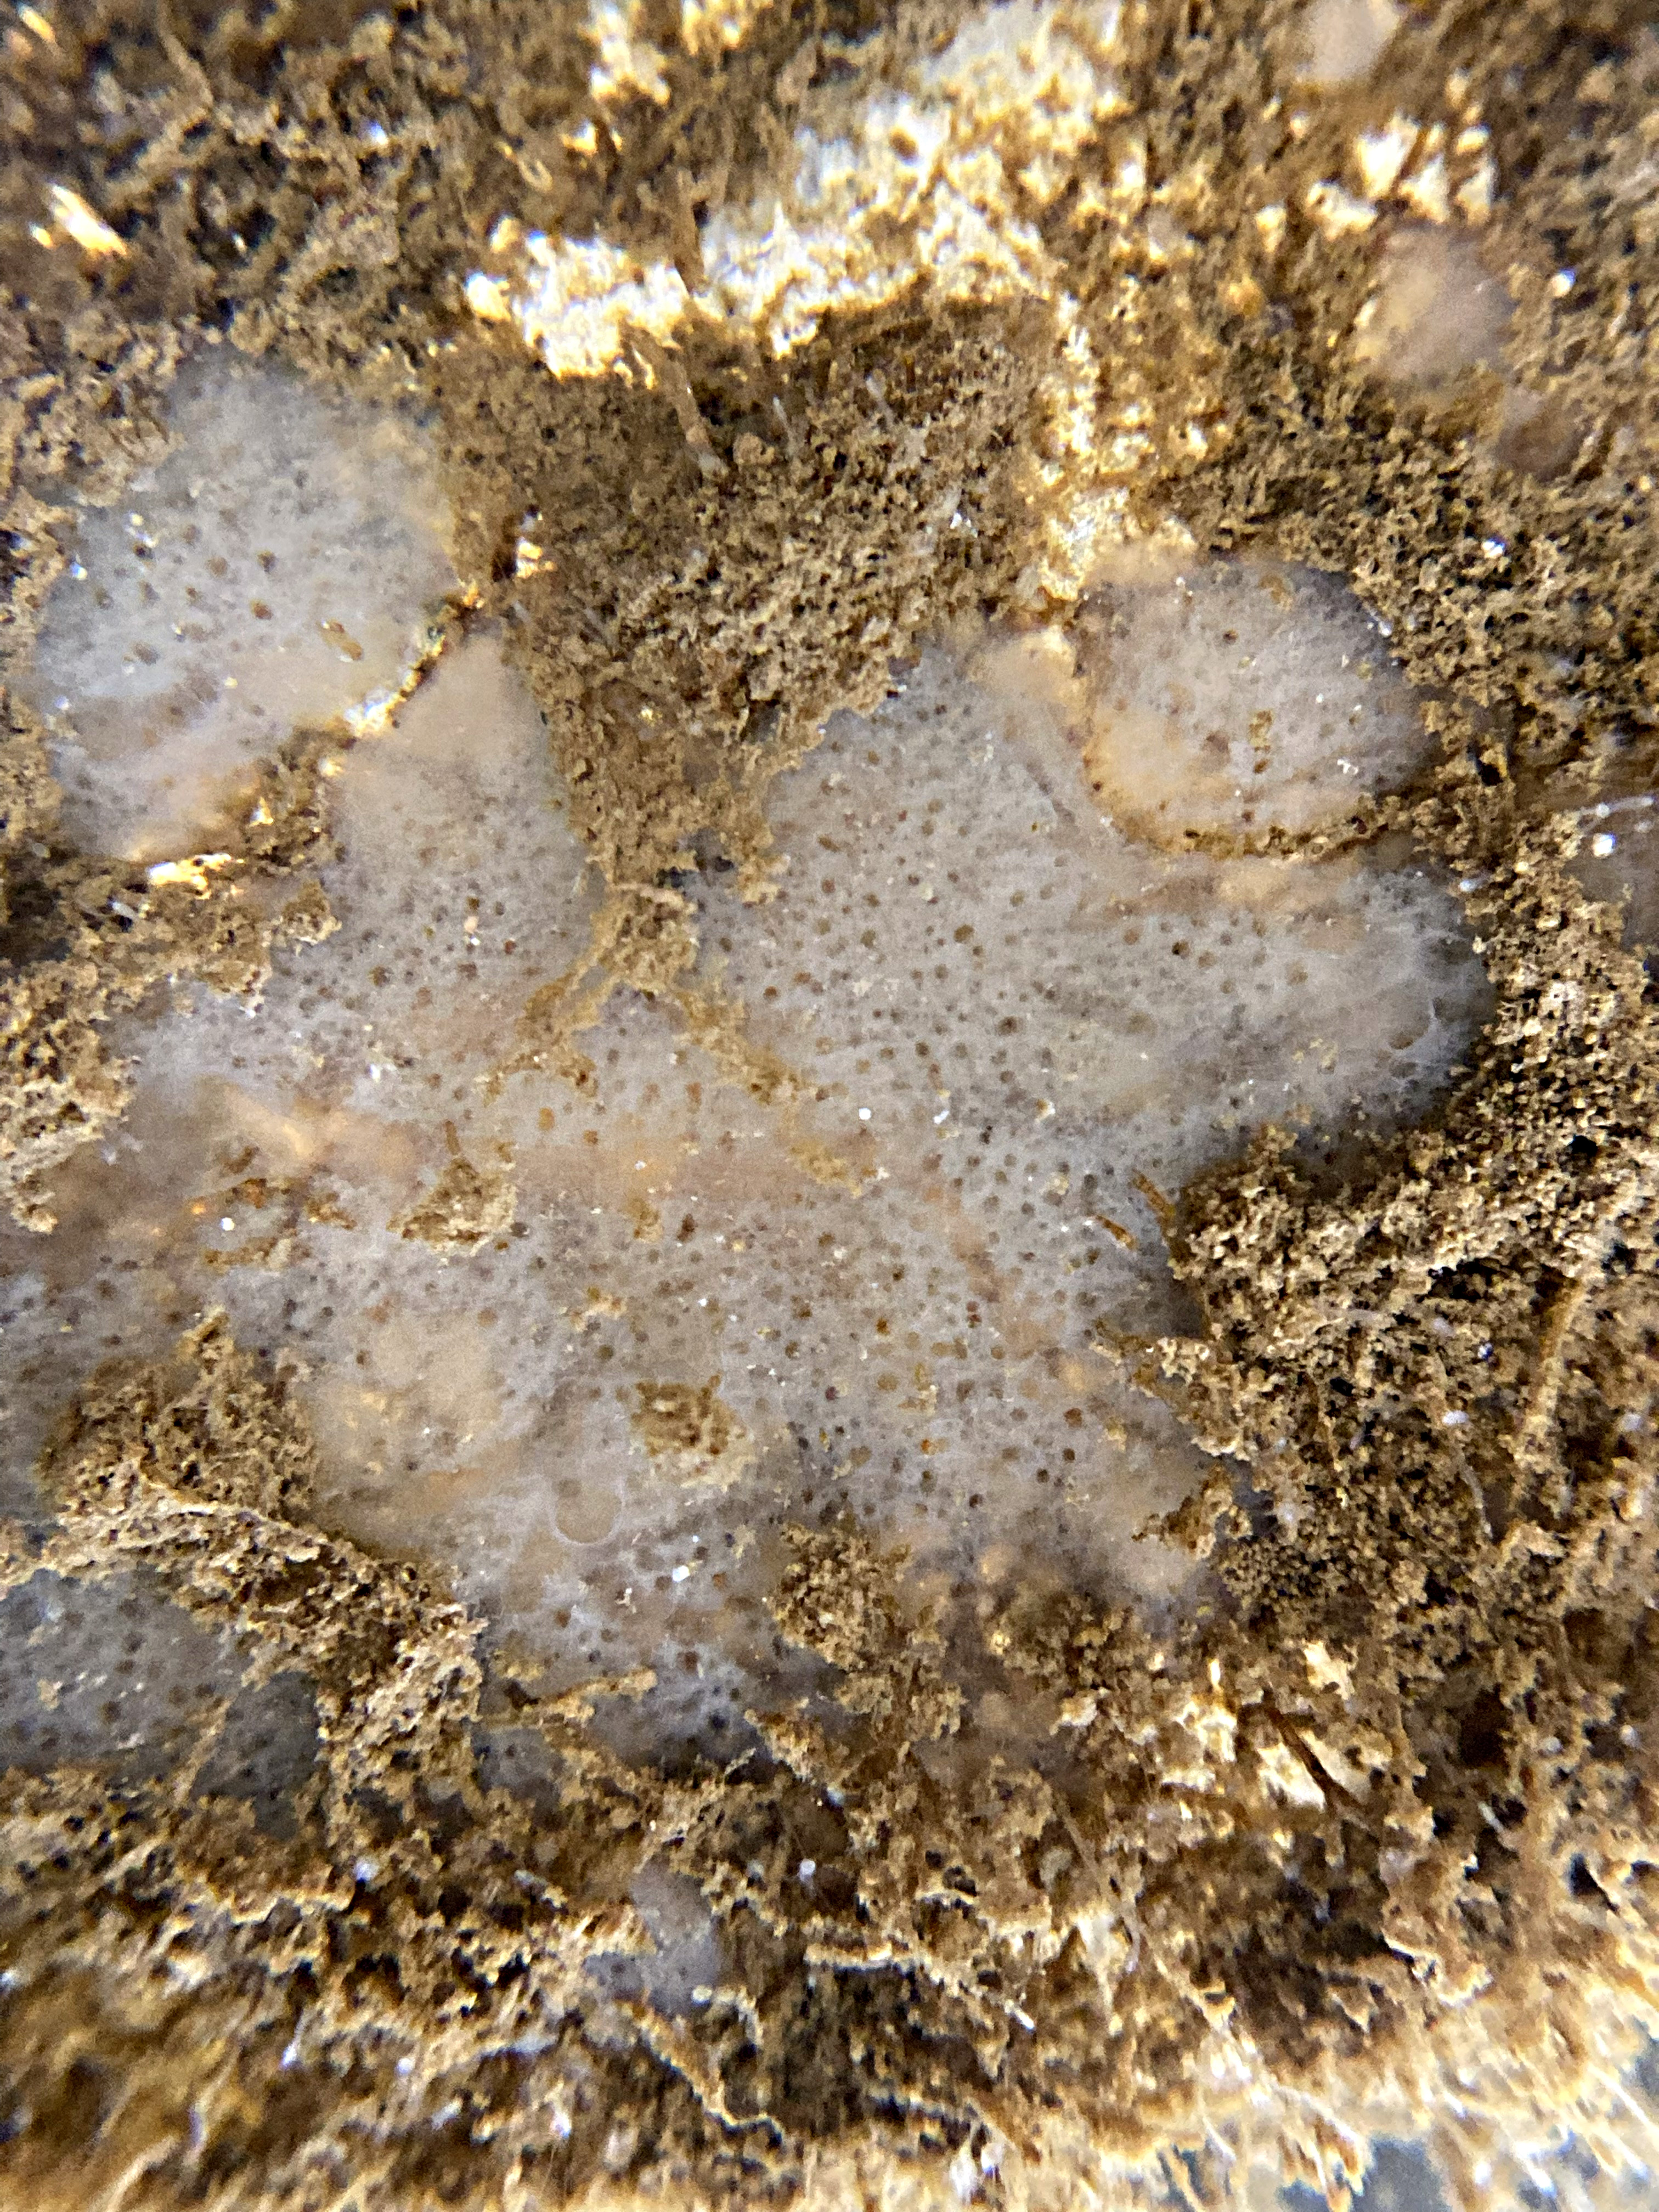 a white foam (the Freshwater Sponge) nestled in the ruff clump of organisms on a biodisc